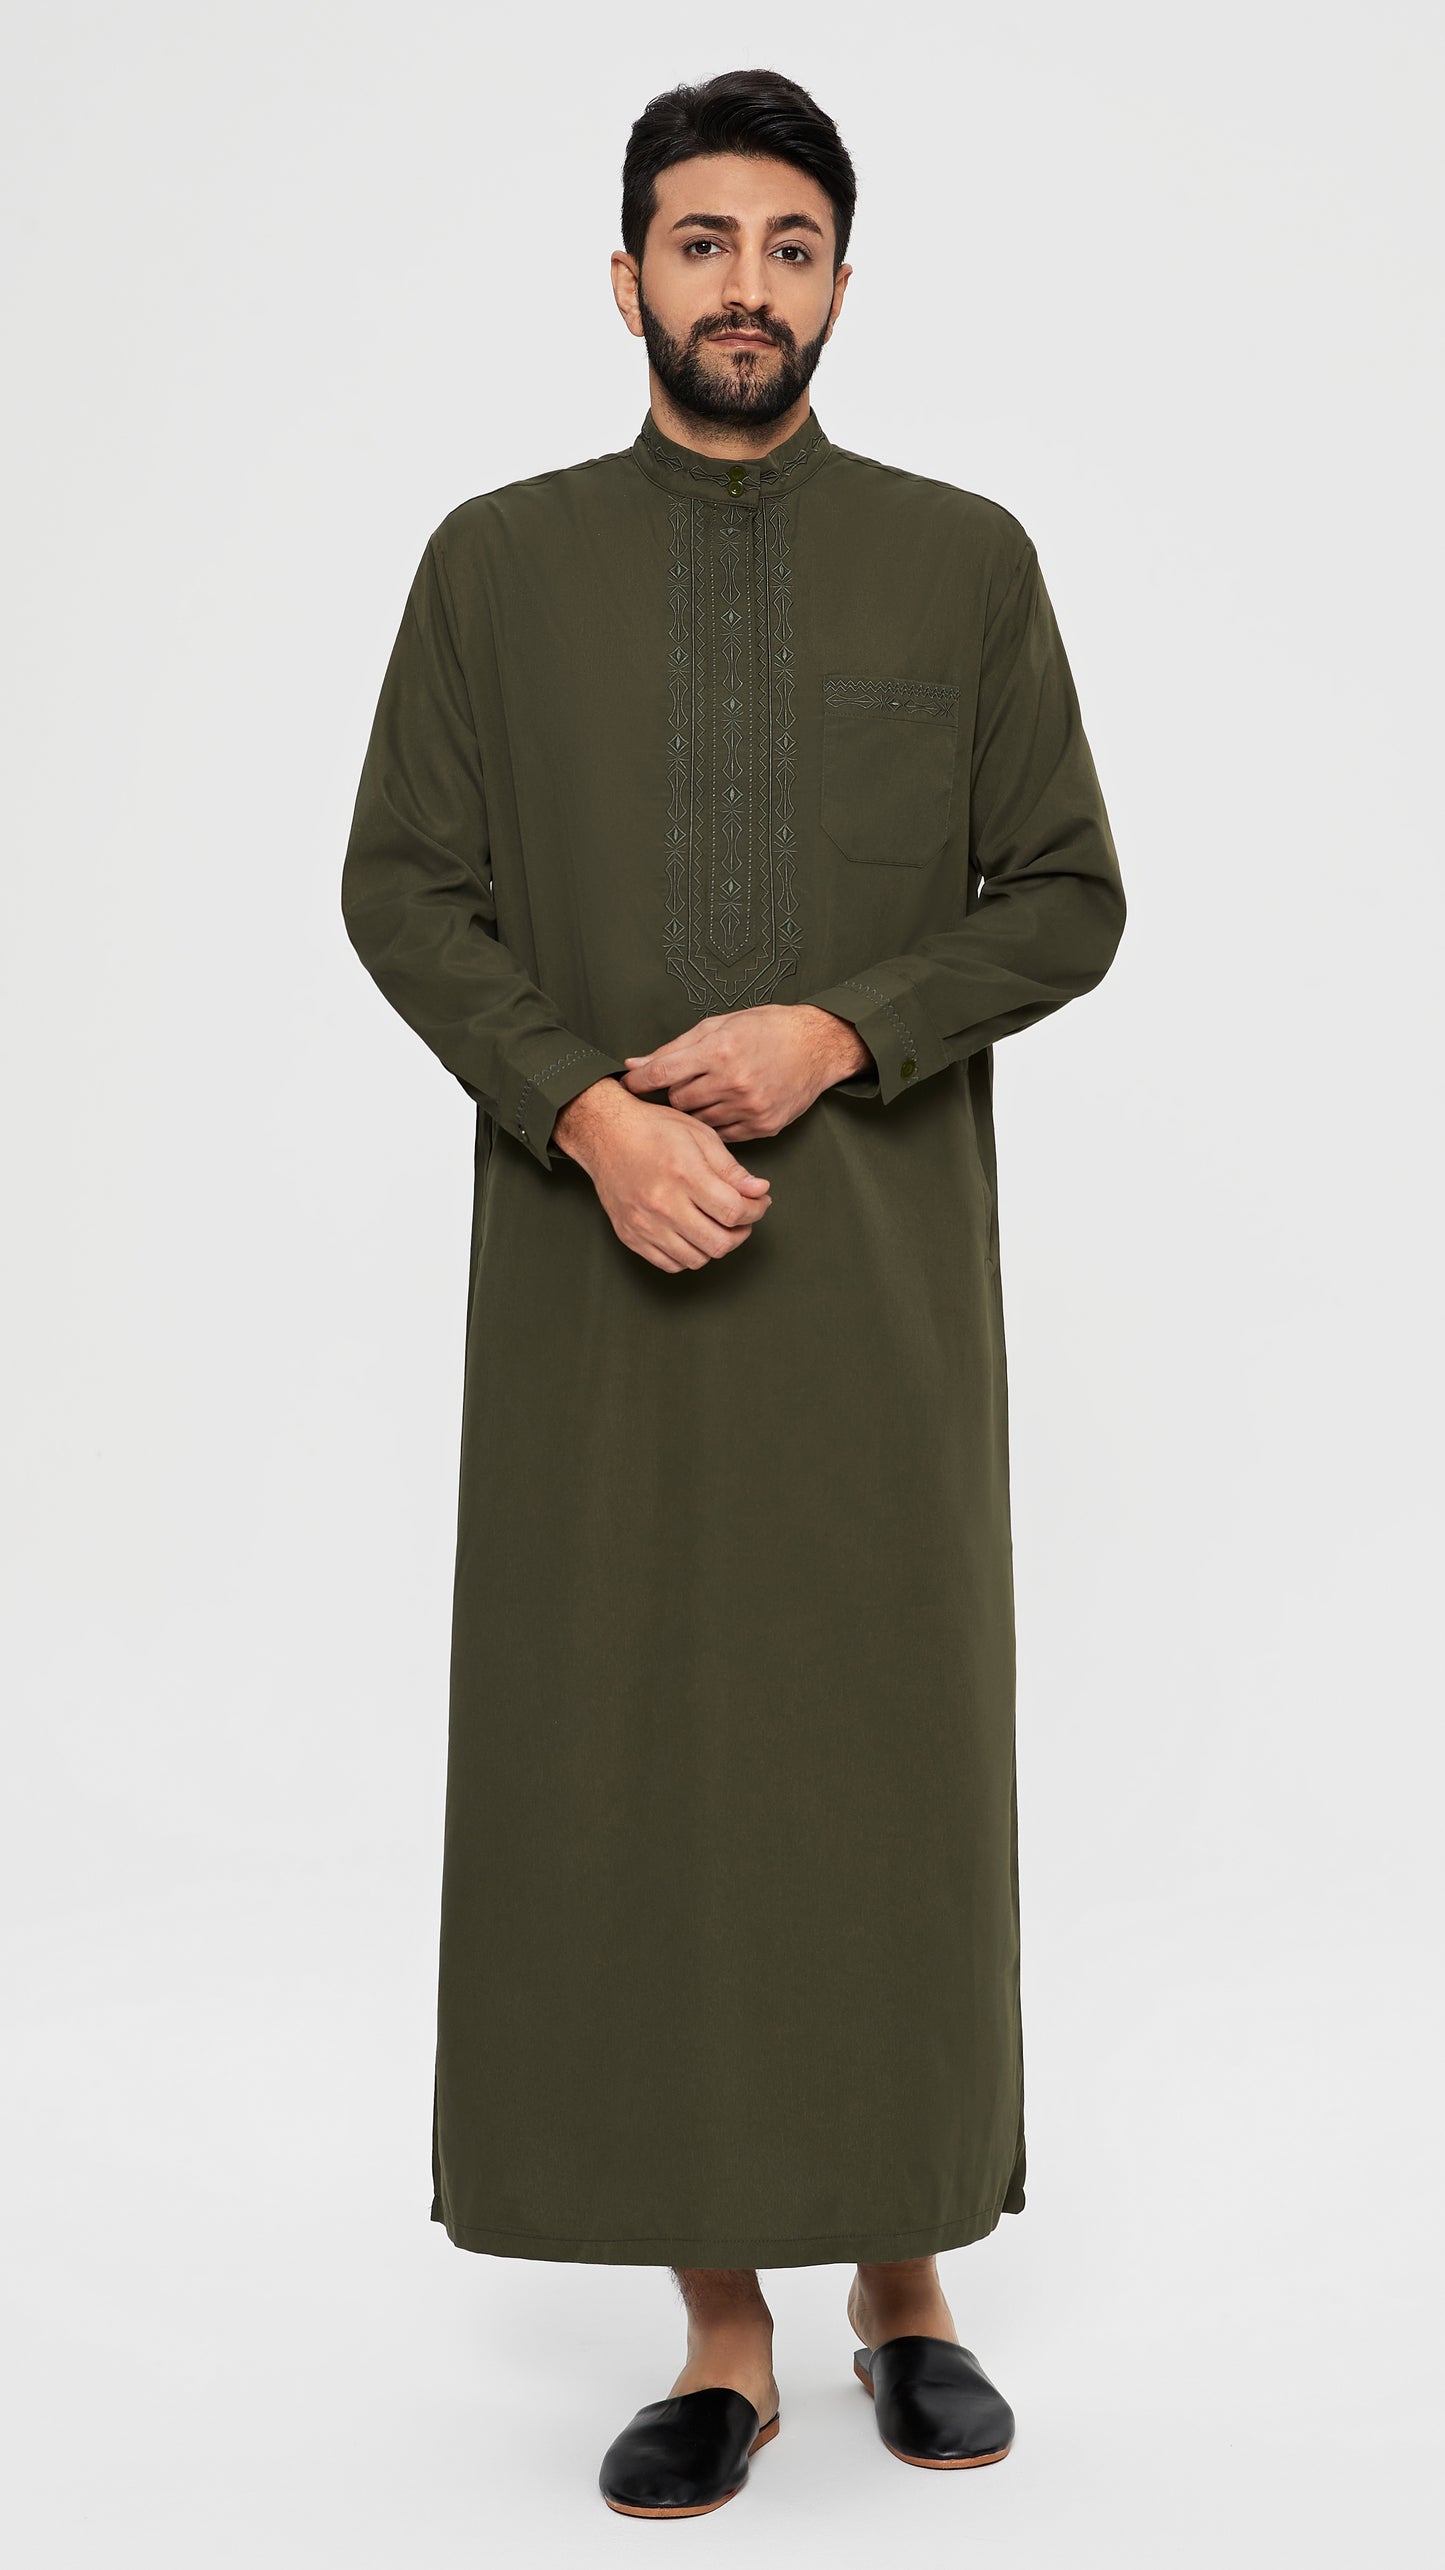 Qamis - Saudí Caqui con bordado de corbata